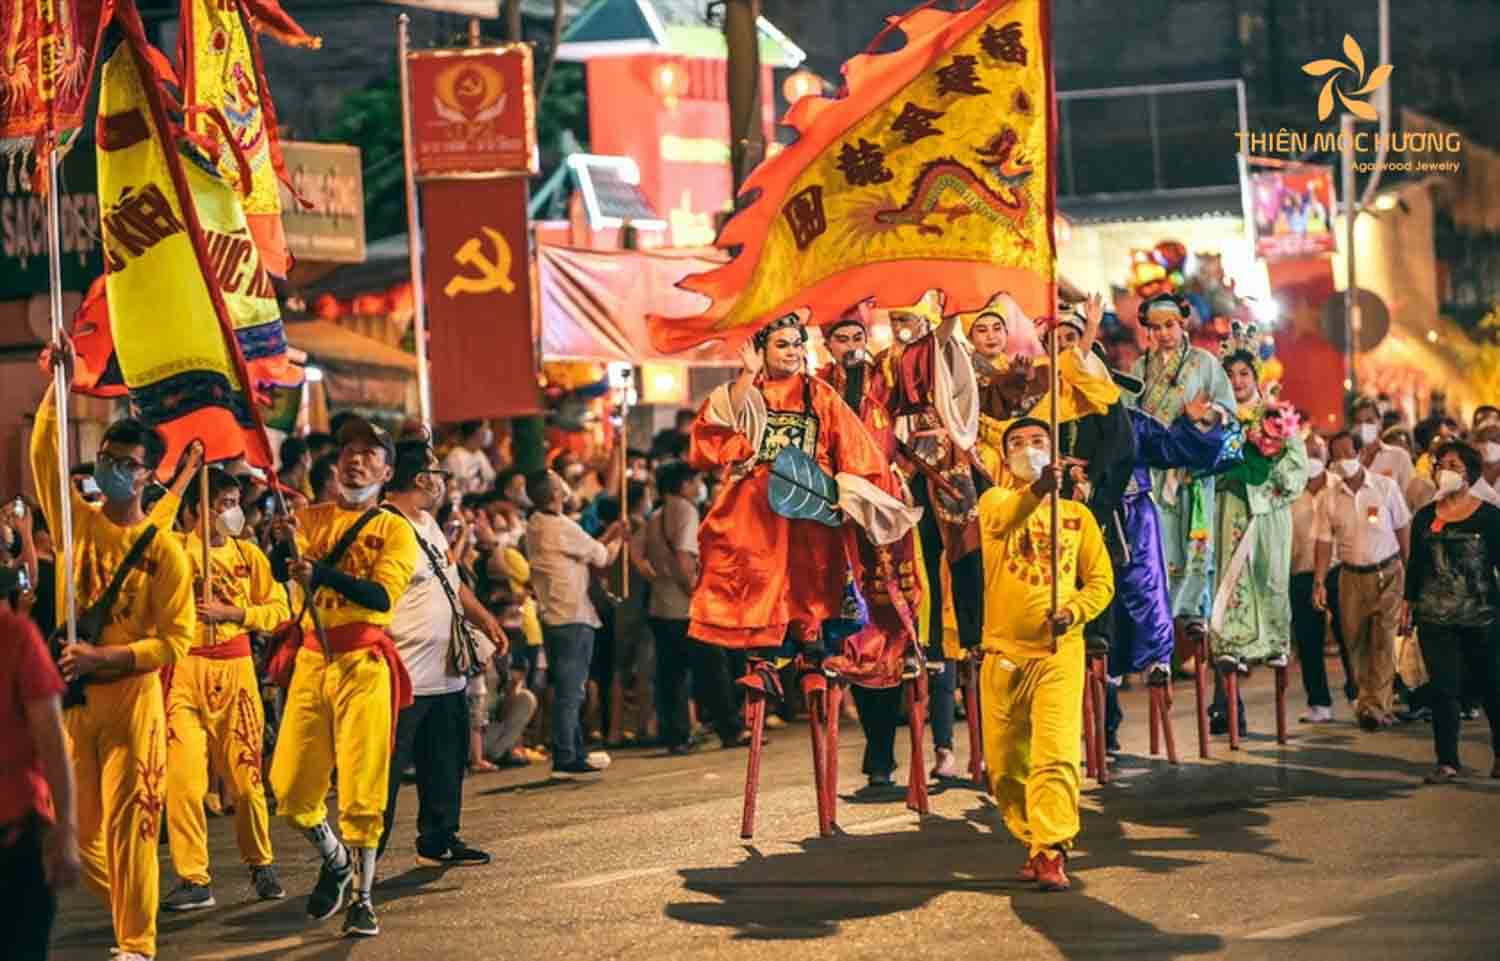 Giong Festival - Cultural Vietnam festival